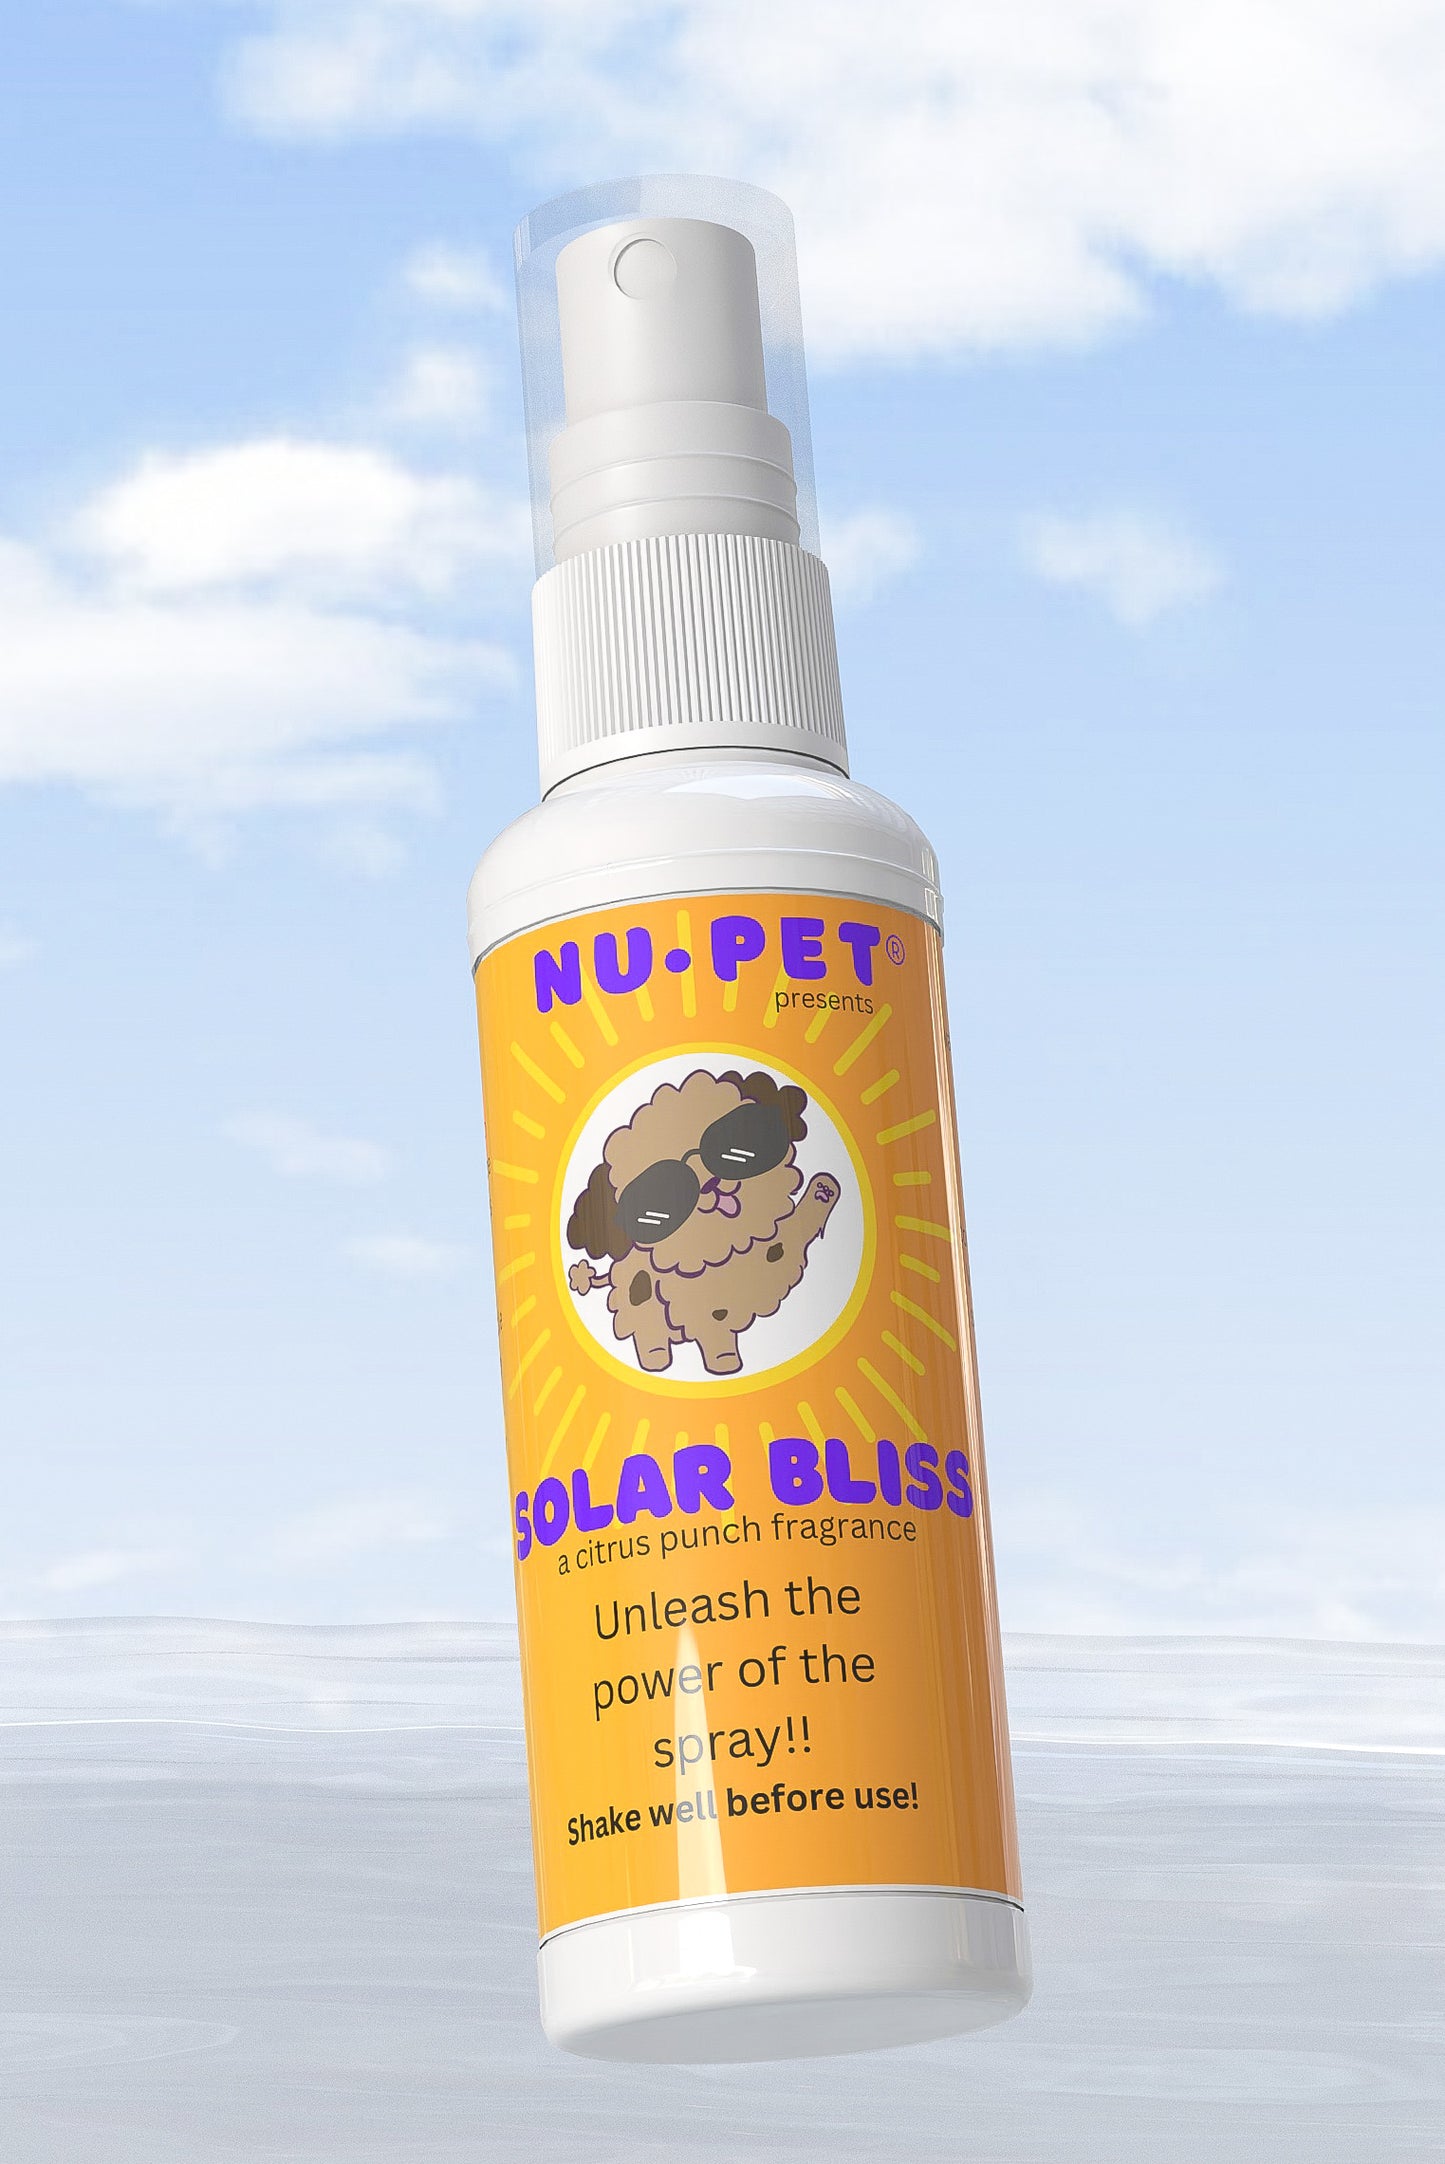 "Solar Bliss" Refresher Spray Limited Edition